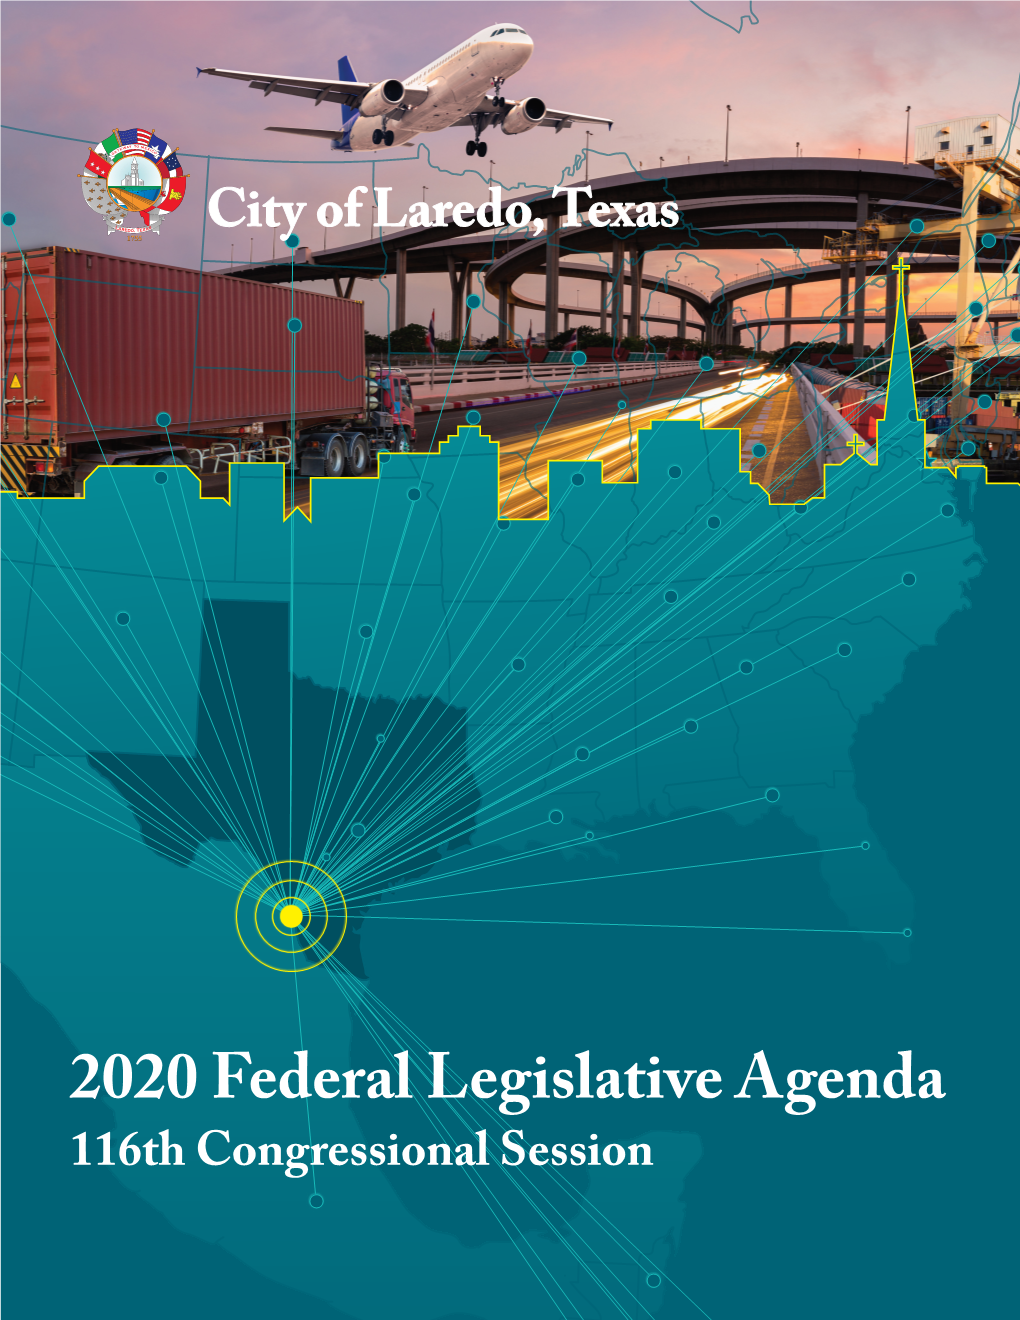 2020 Legislative Agenda